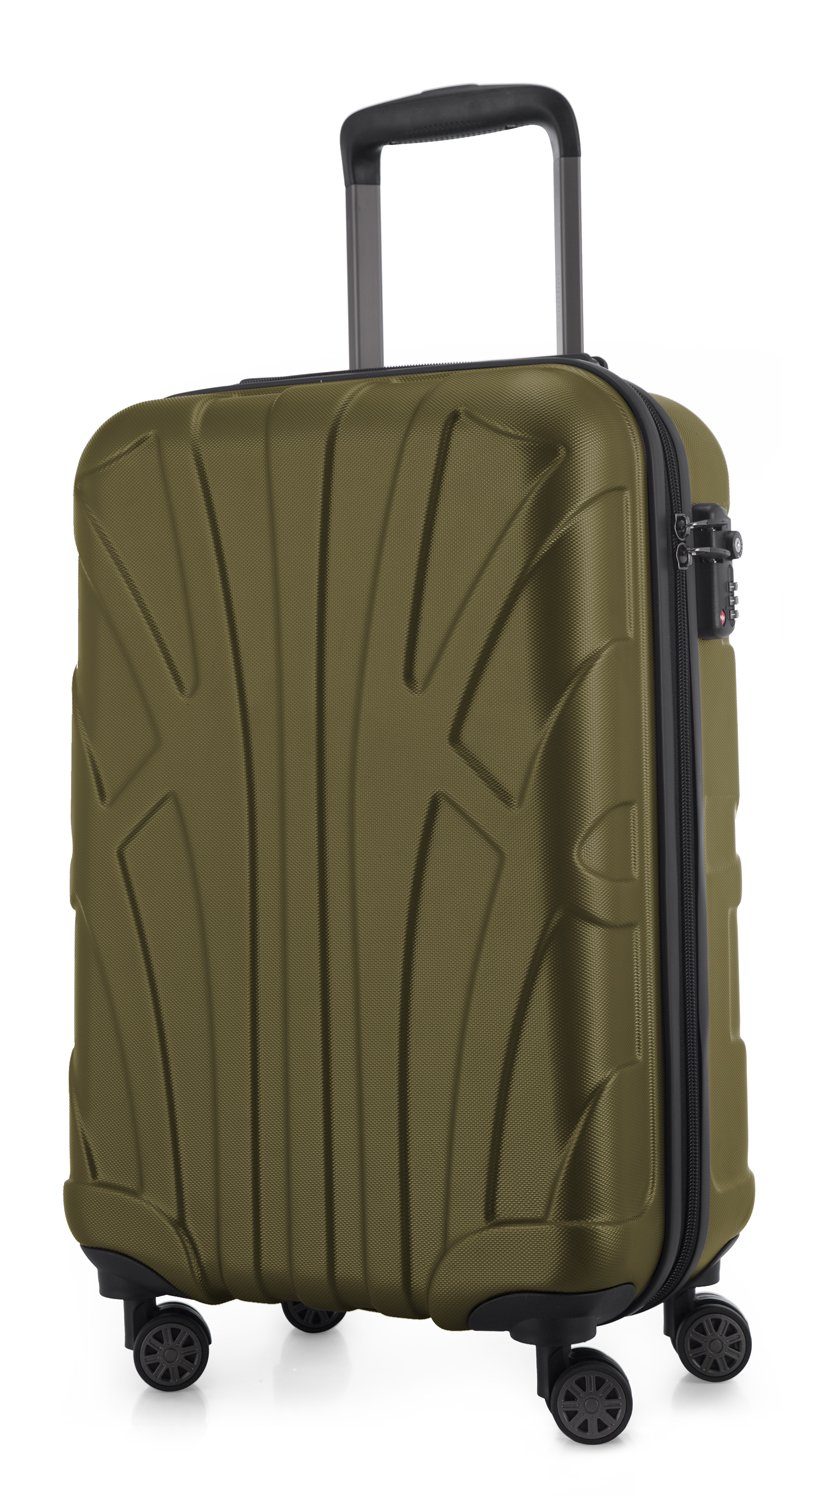 Suitline Handgepäckkoffer S1, 4 Rollen, Robust, Leicht, TSA Zahlenschloss, 55 cm, 33 L Packvolumen Avocado